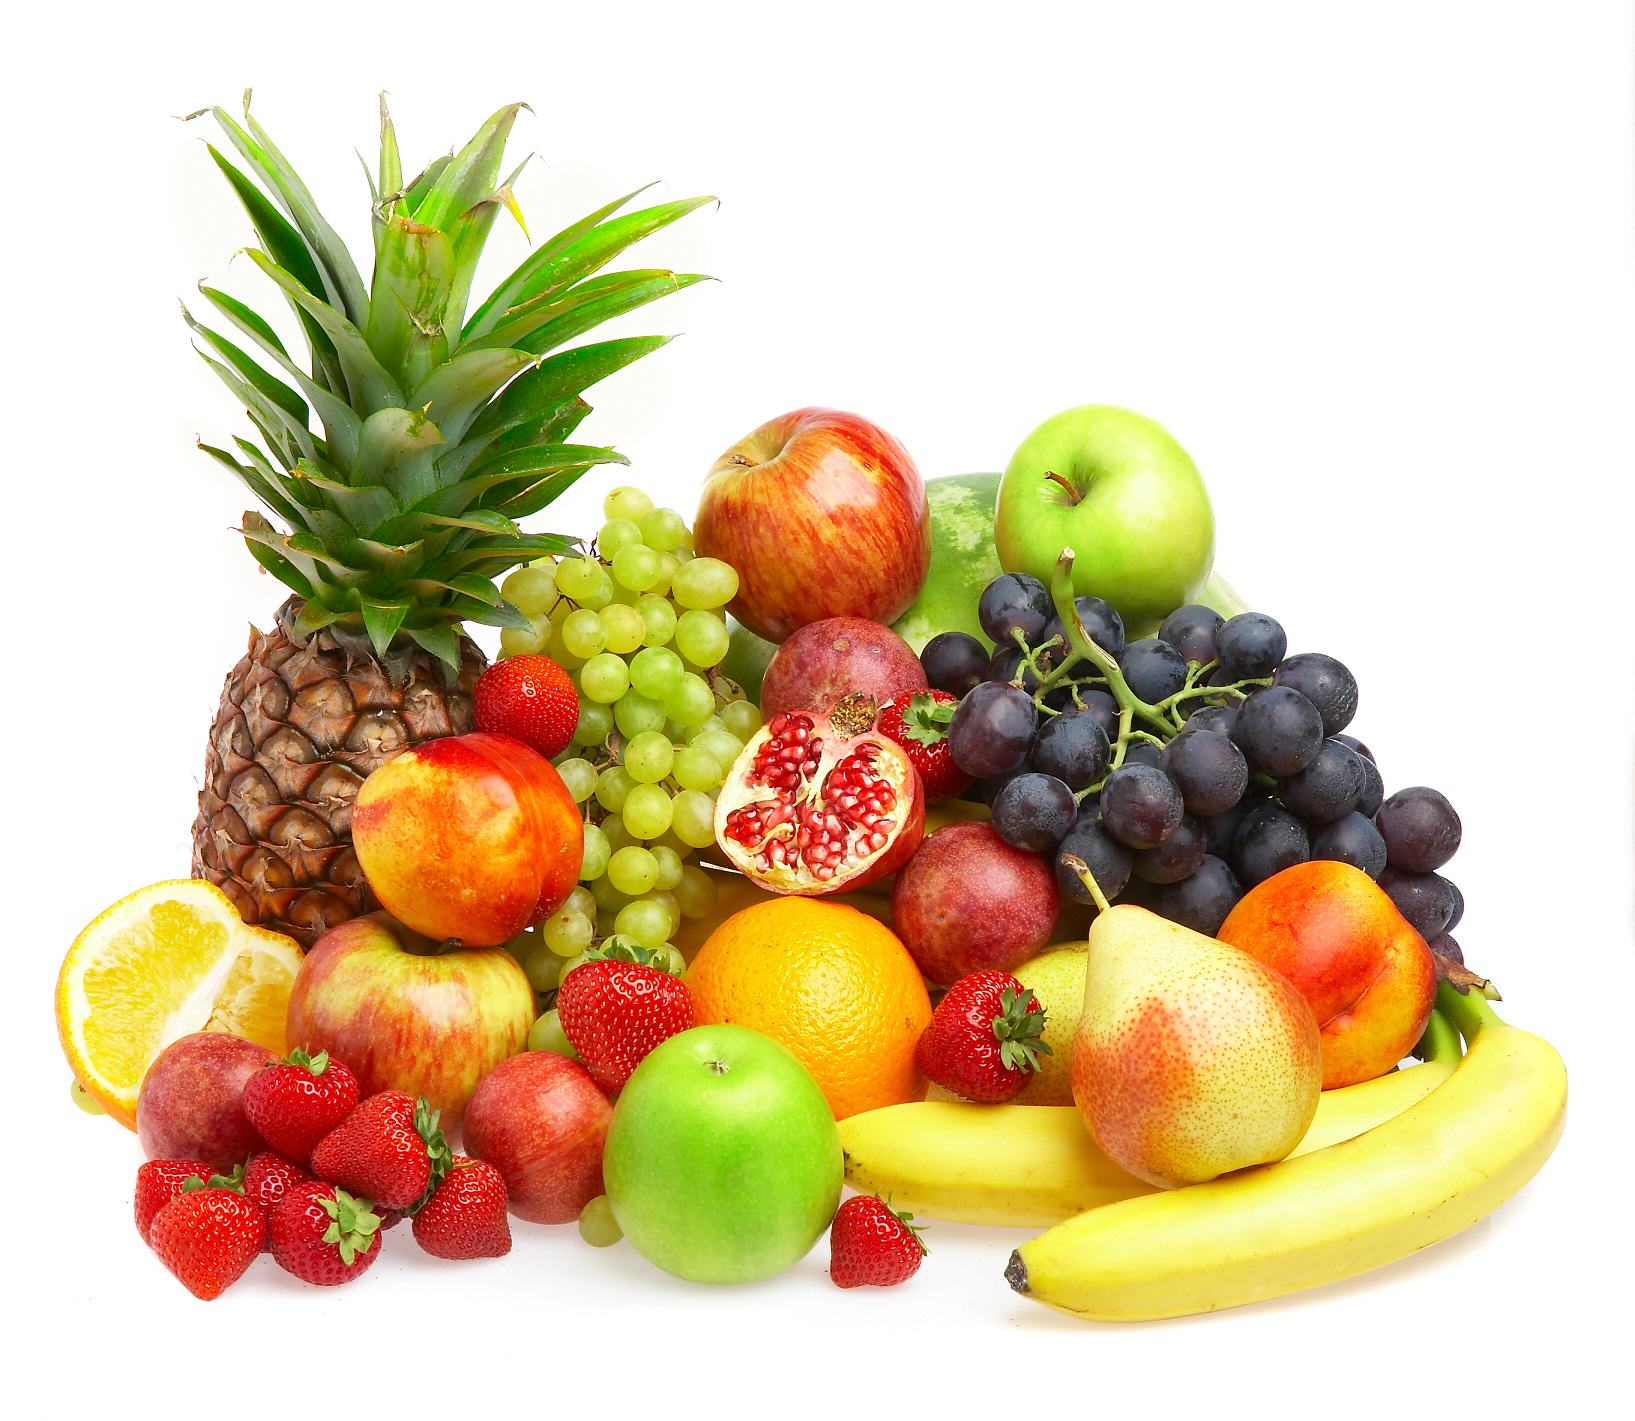 Fruits containing antioxidants